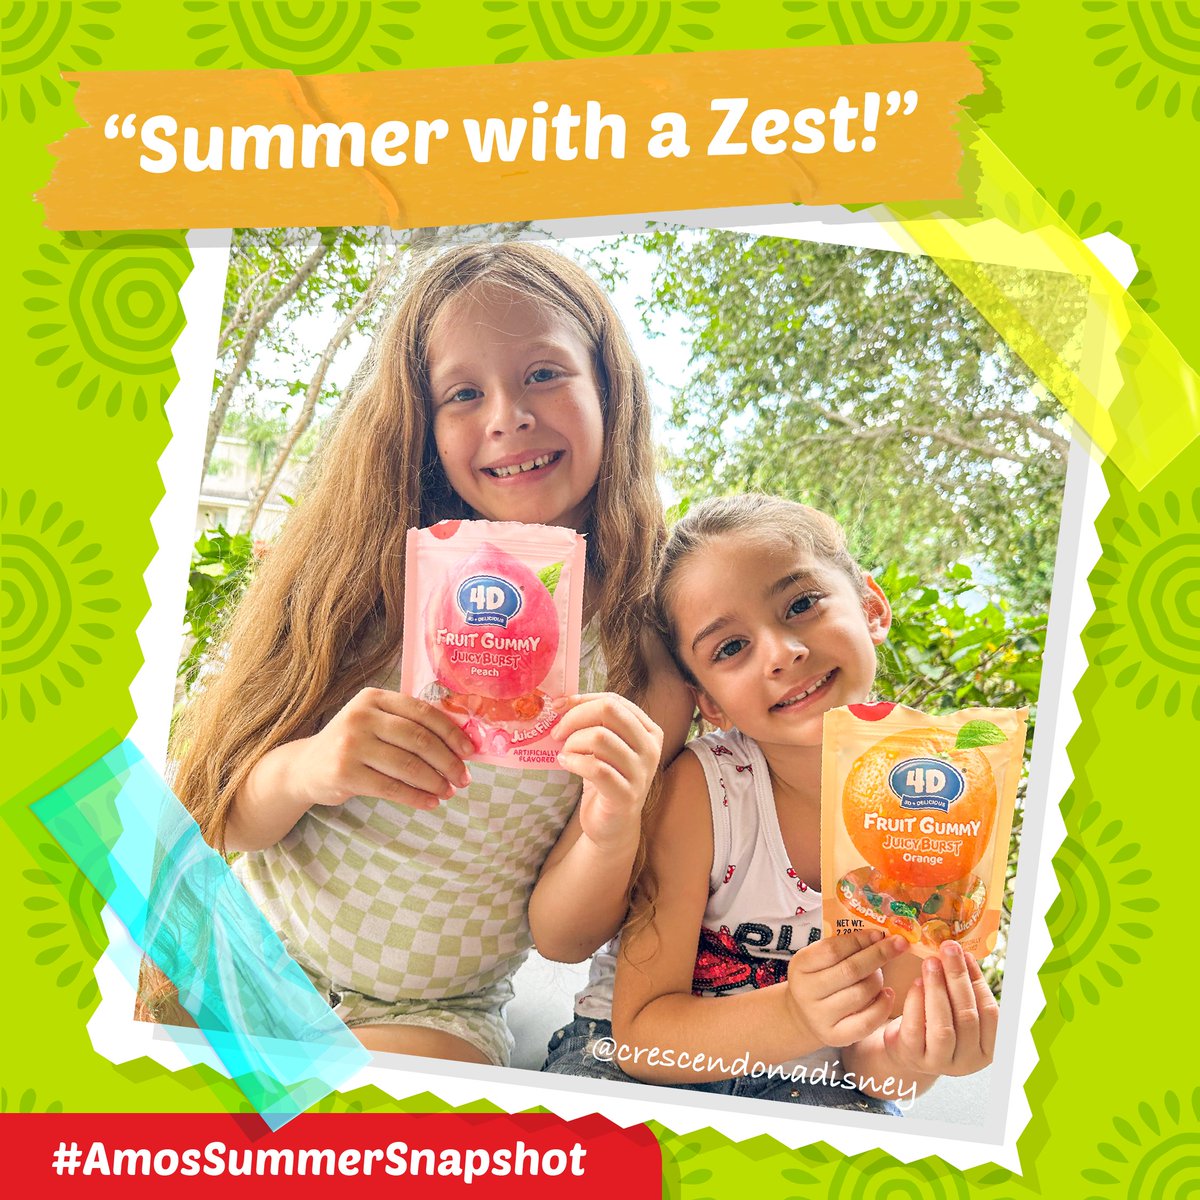 🍑🍊 Double the fruity fun with @crescendonadisney (from Instagram)

#amossweets #fruits #fruitsnack #4dfruitgummy #summersnacks #gummy #juicy #summervibes #snacktime